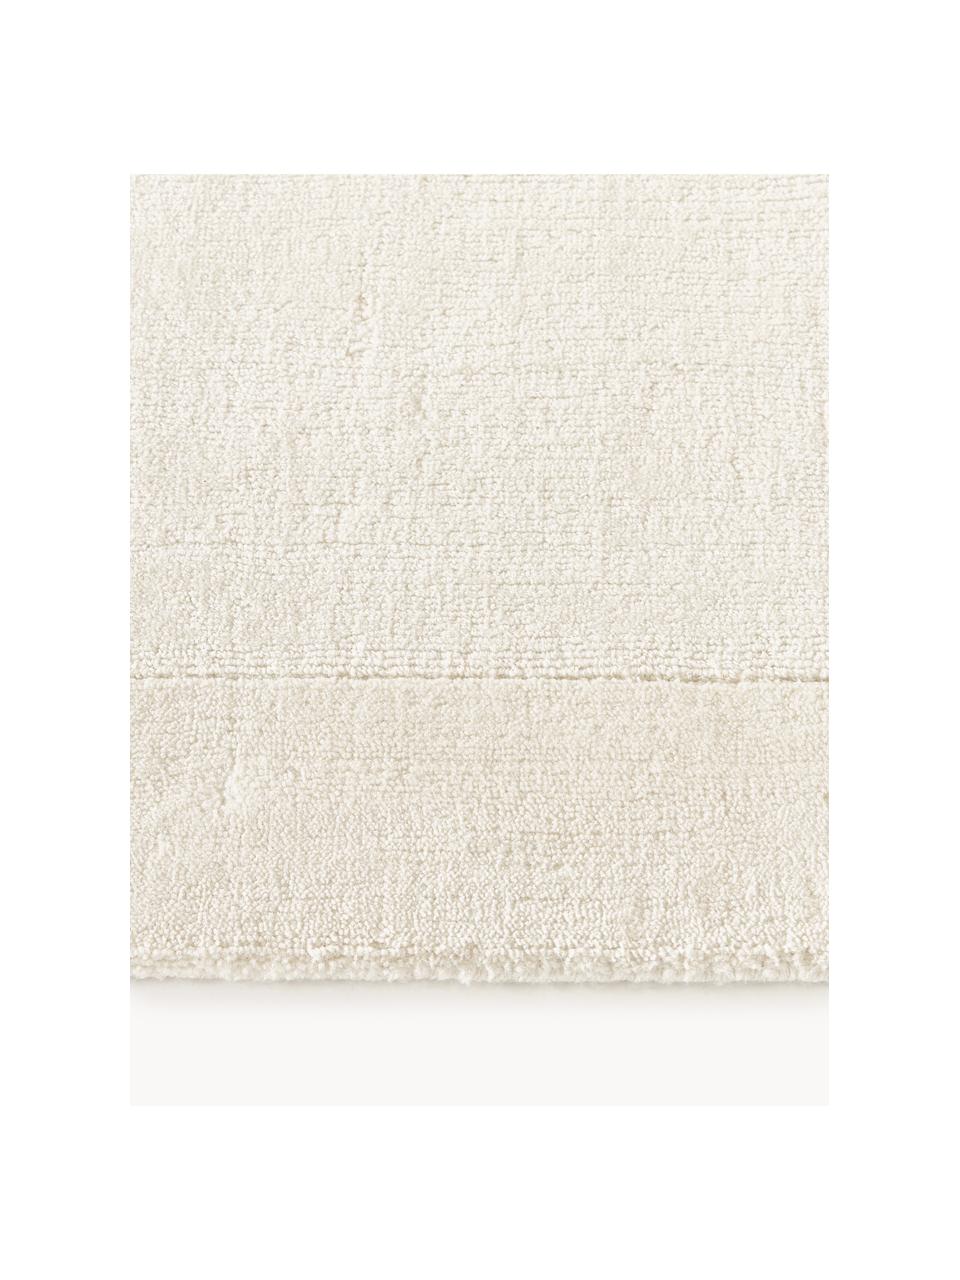 Tapis chatoyant Kari, 100 % polyester, certifié GRS, Blanc crème, larg. 80 x long. 150 cm (taille XS)